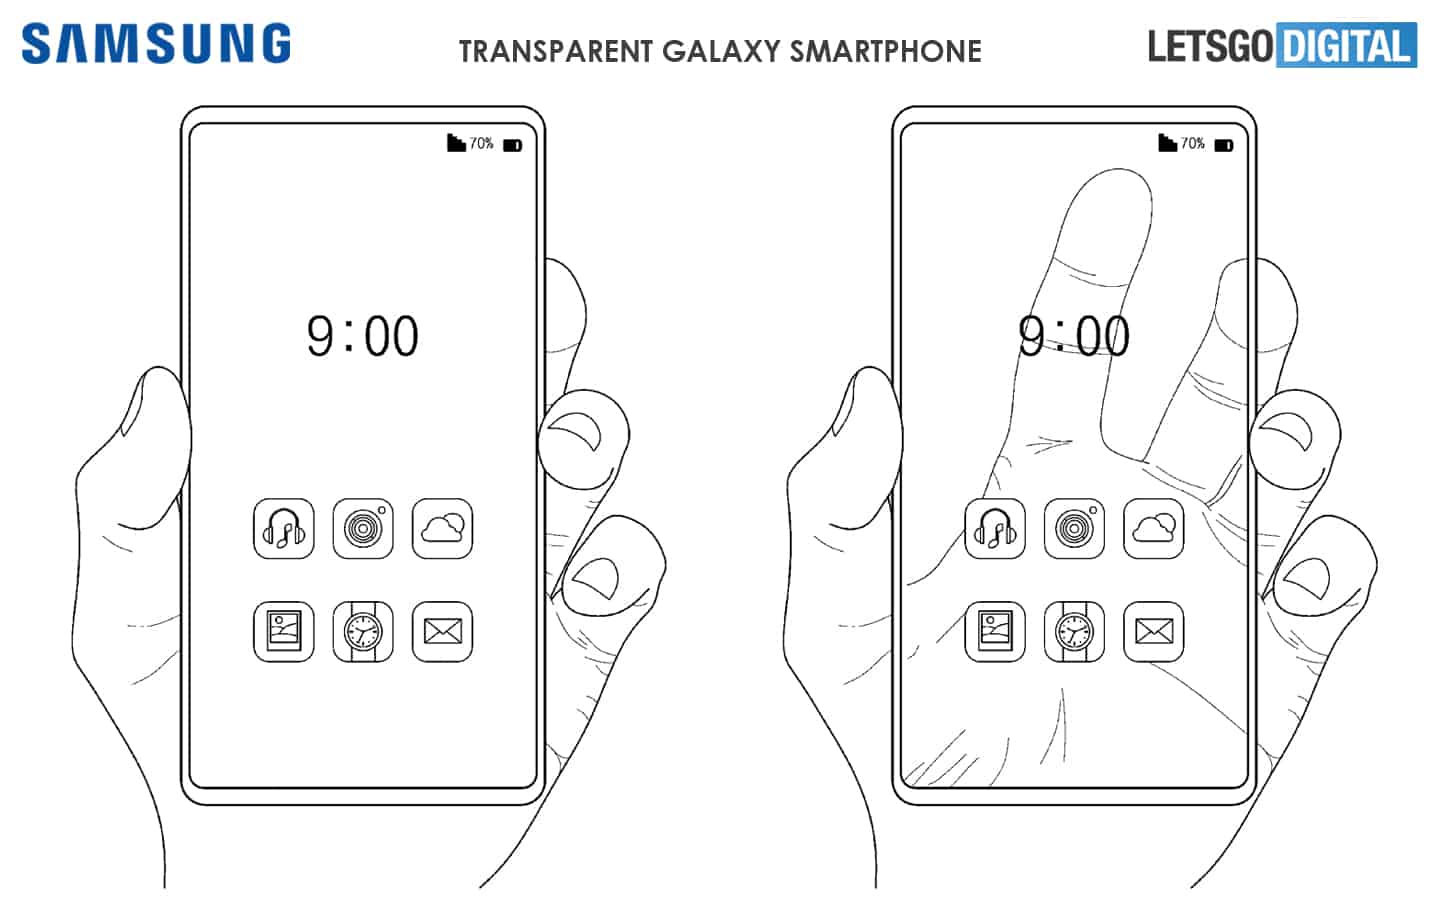 Samsung-transparent-smartphone-Letsgodigital-image-6